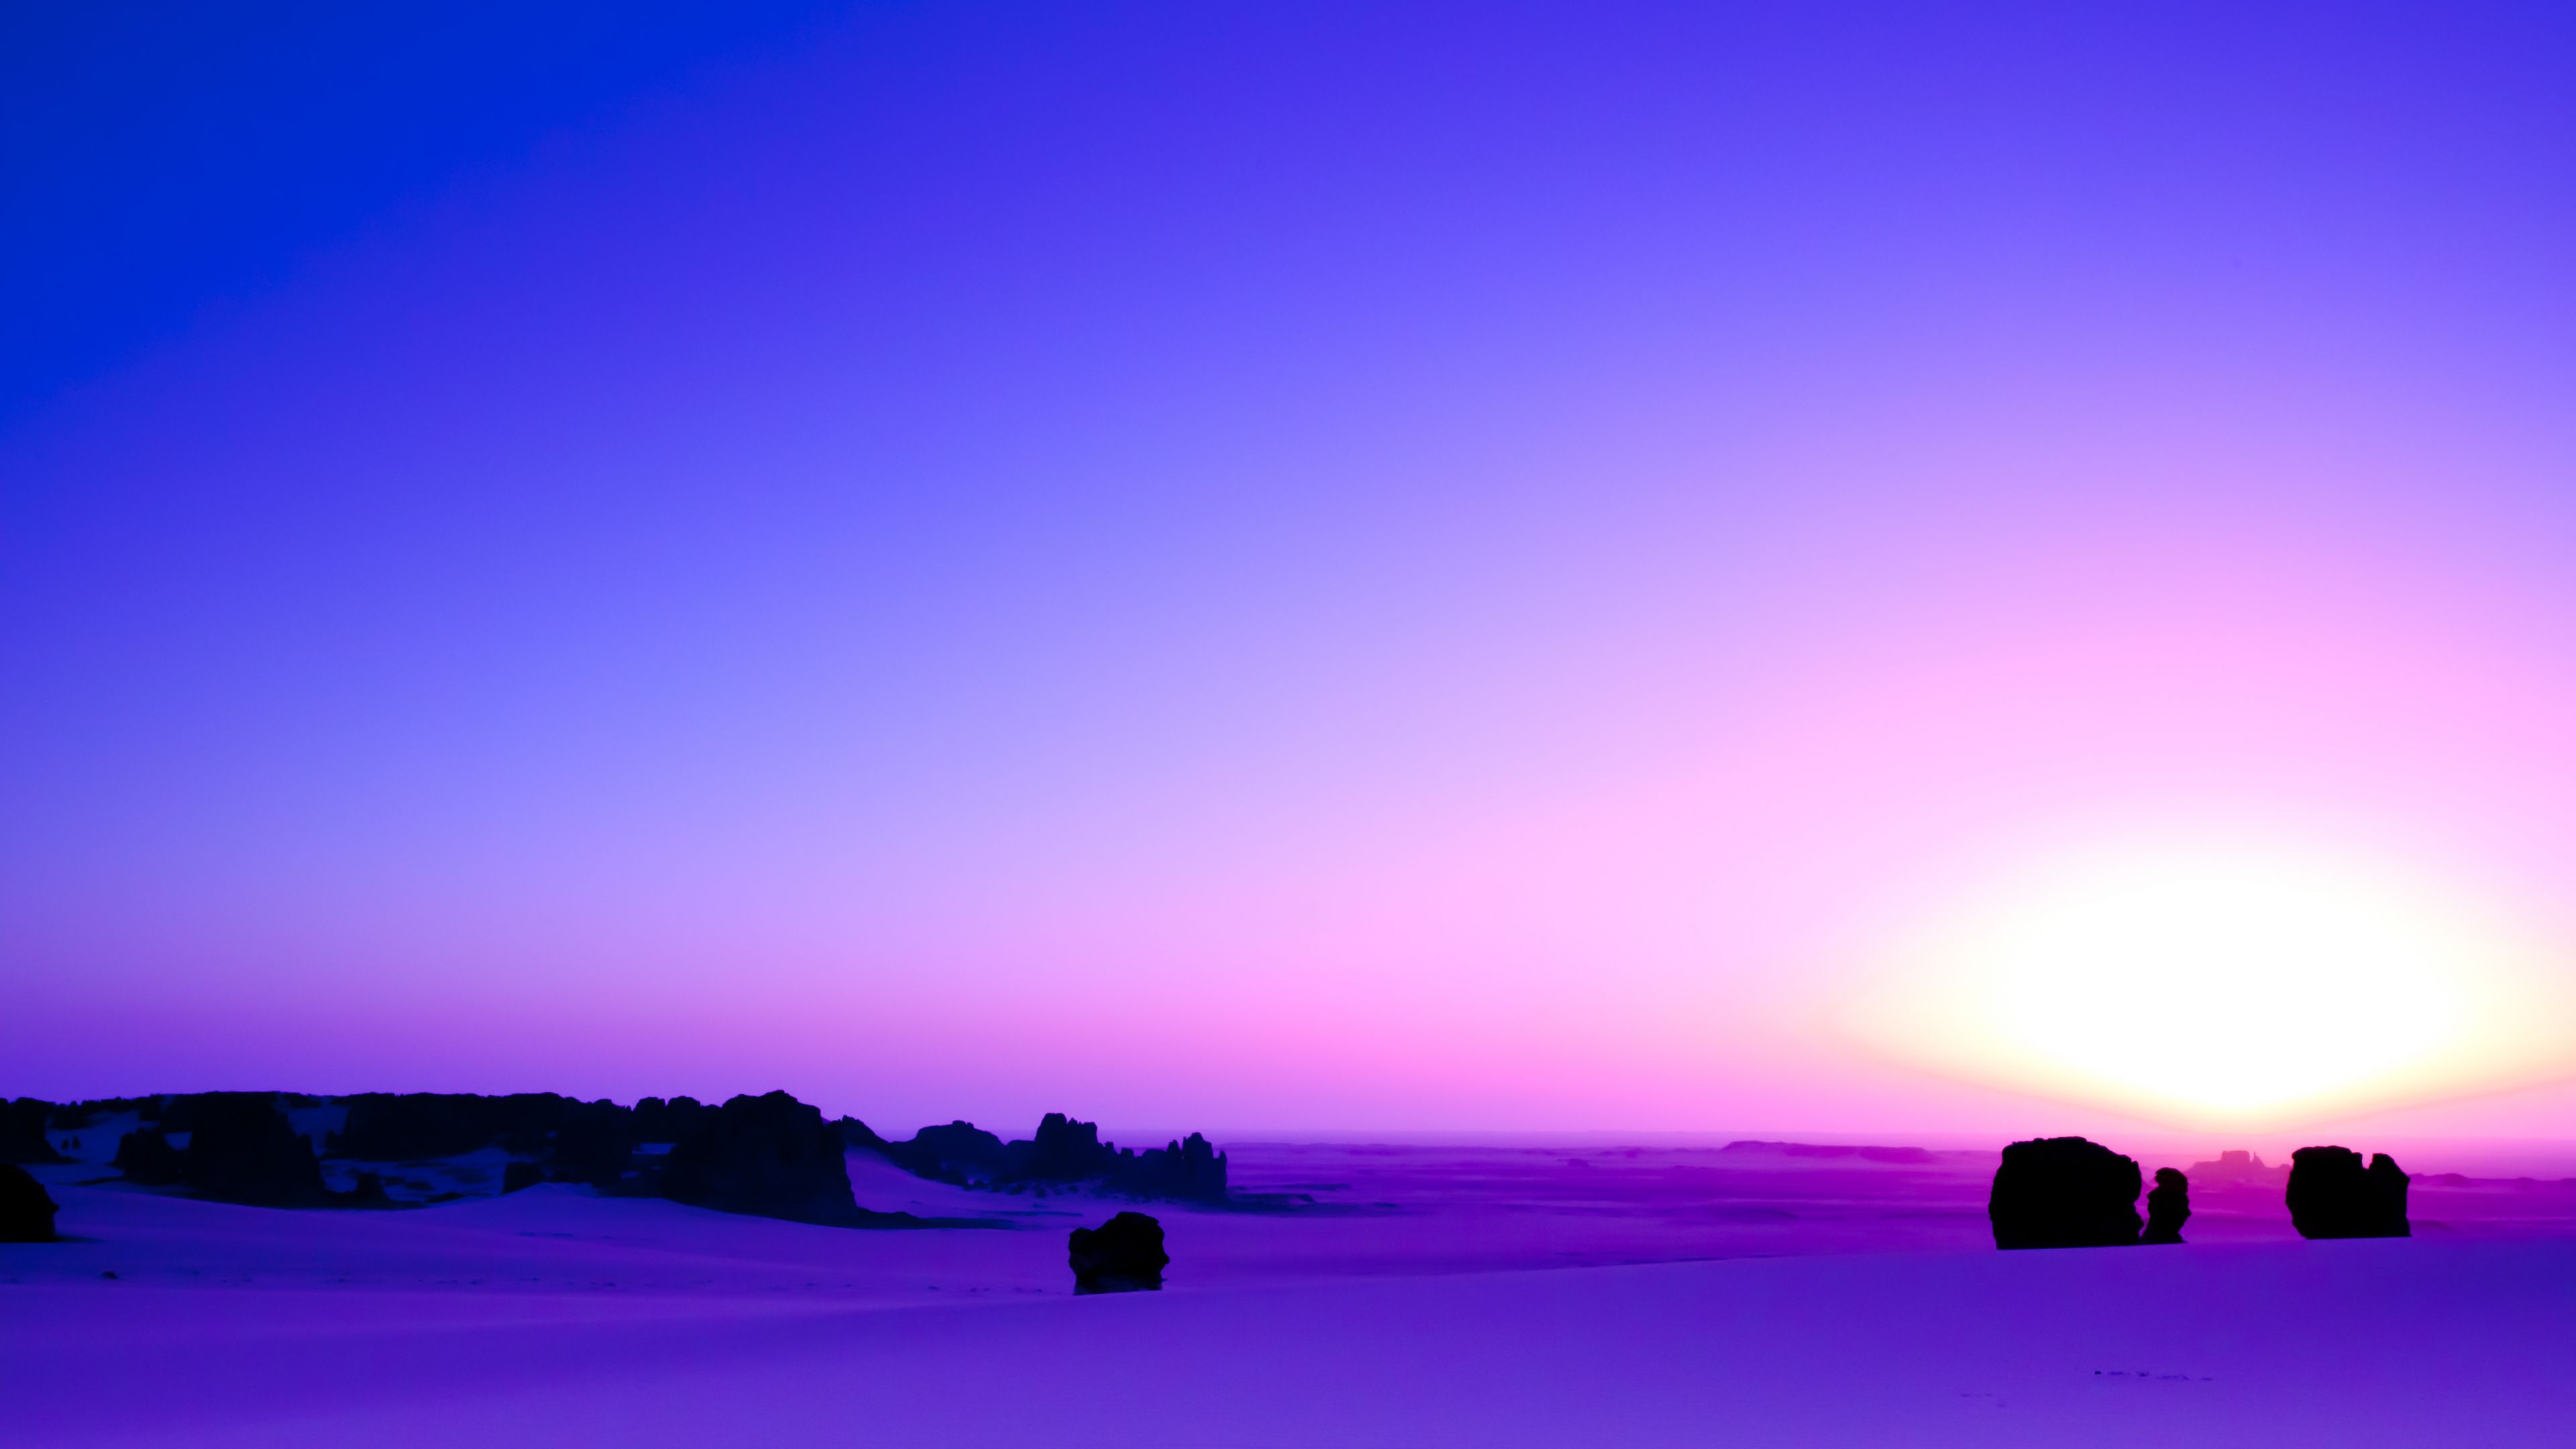 Download 3840x2160 wallpaper purple, sunset, skyline, desert, landscape, 4k, uhd 16: widescreen, 3840x2160 HD image, background, 8643